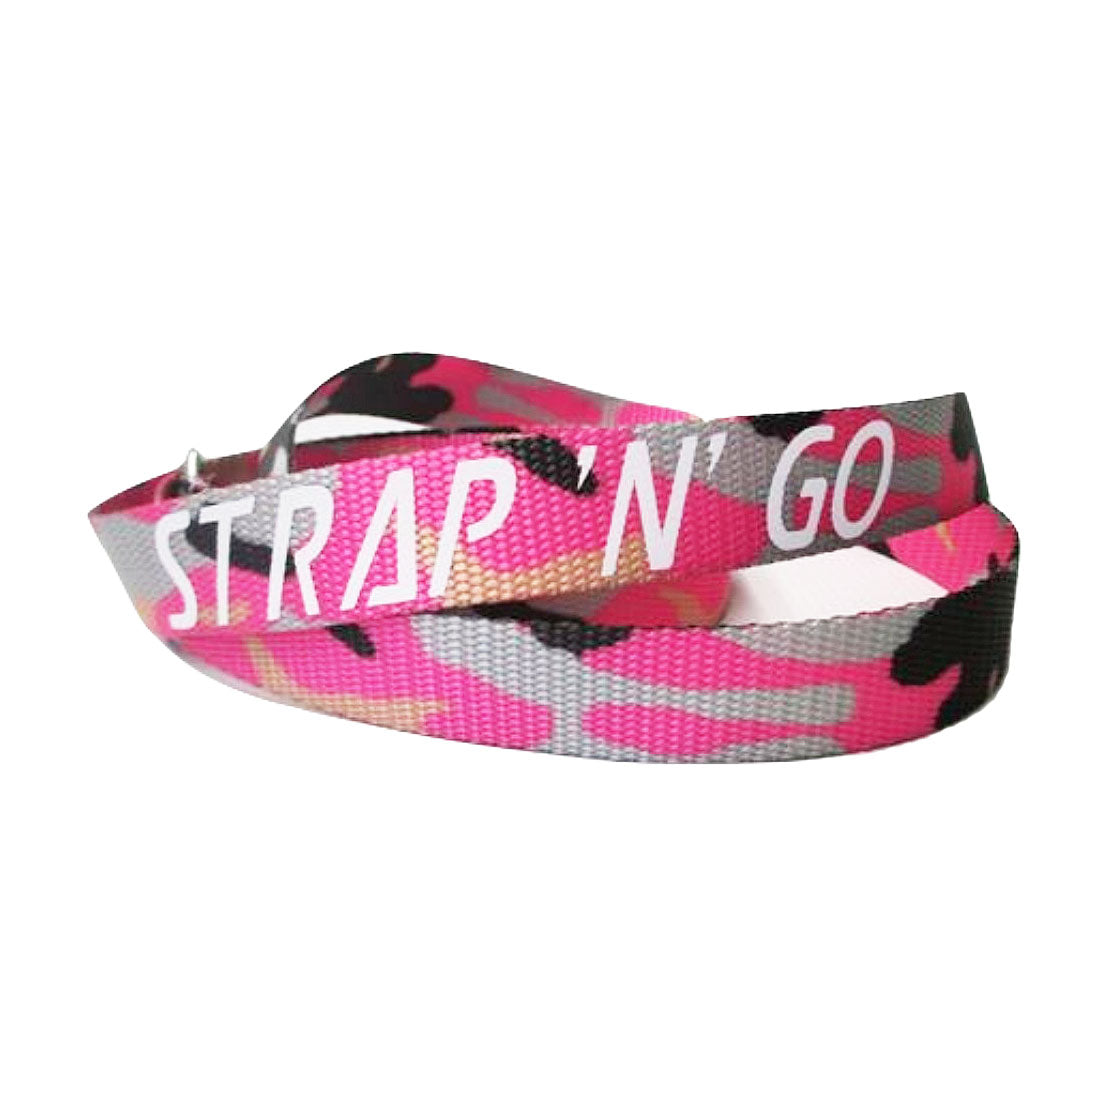 Strap N Go Skate Noose/Leash - Patterns Pink Camo Roller Skate Accessories